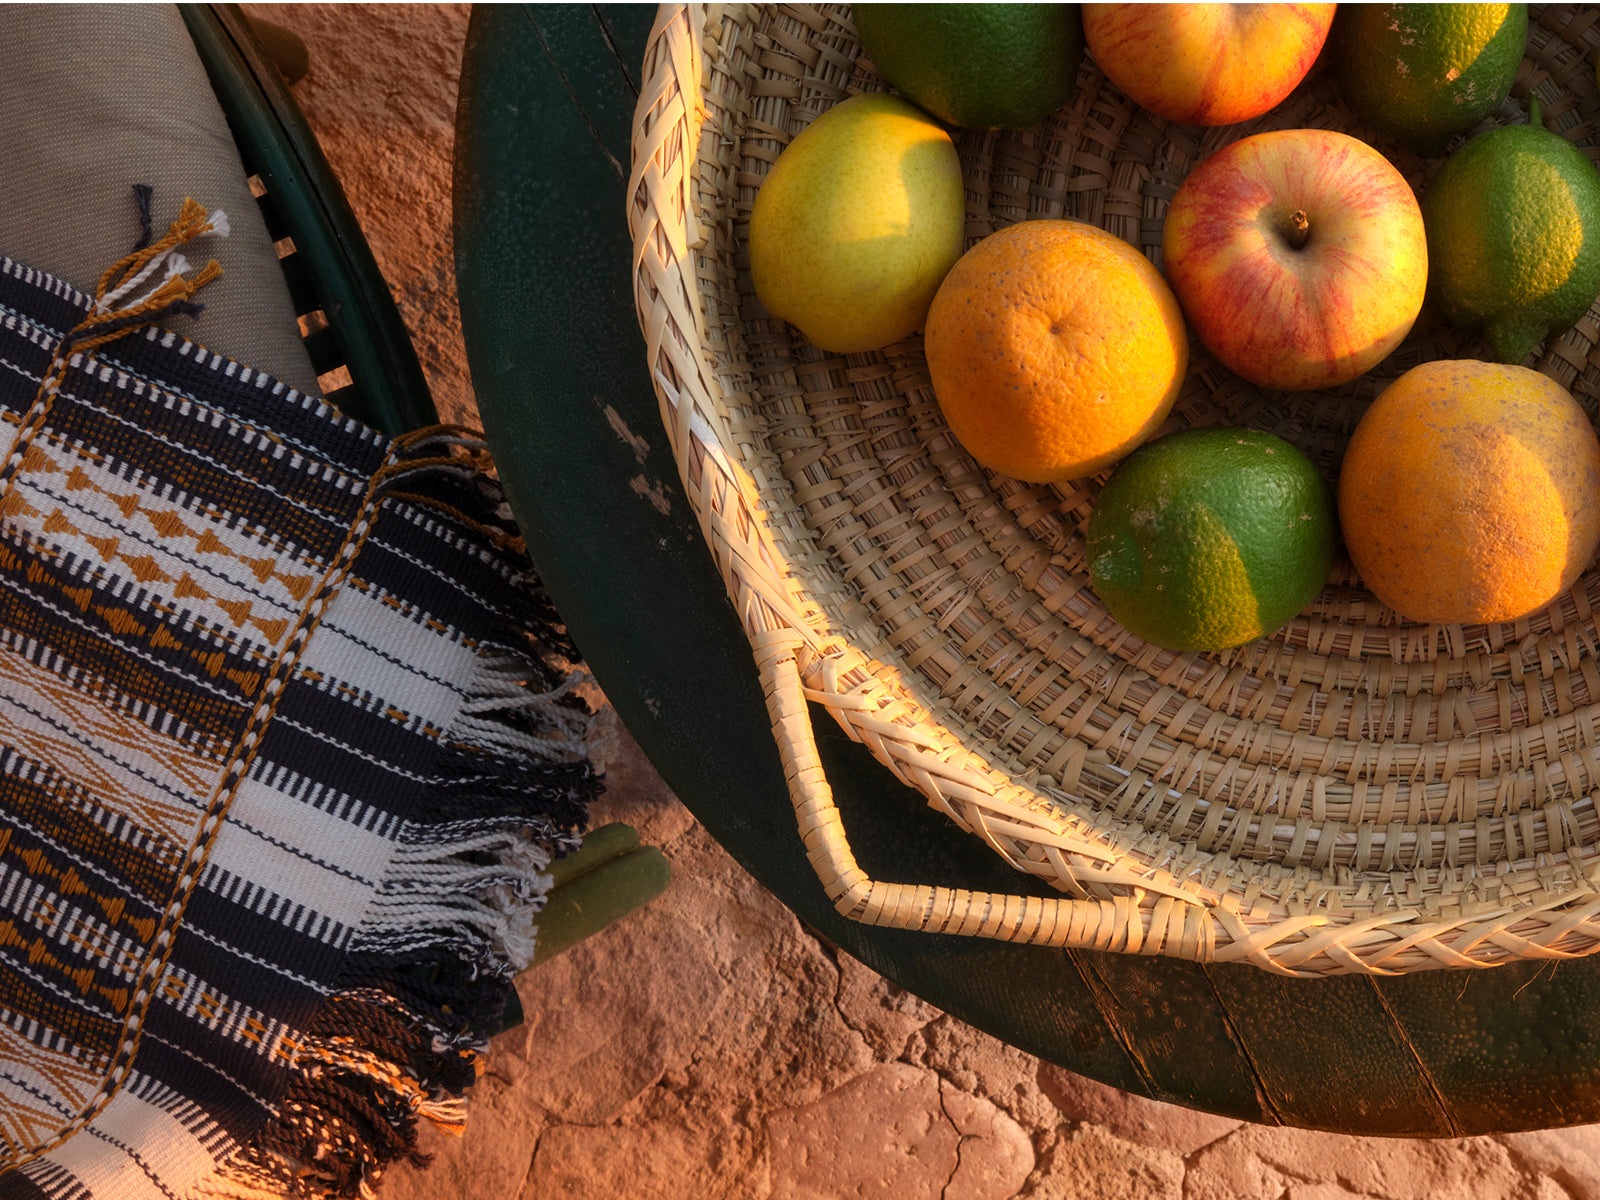 Handwoven Moroccan basket OUL